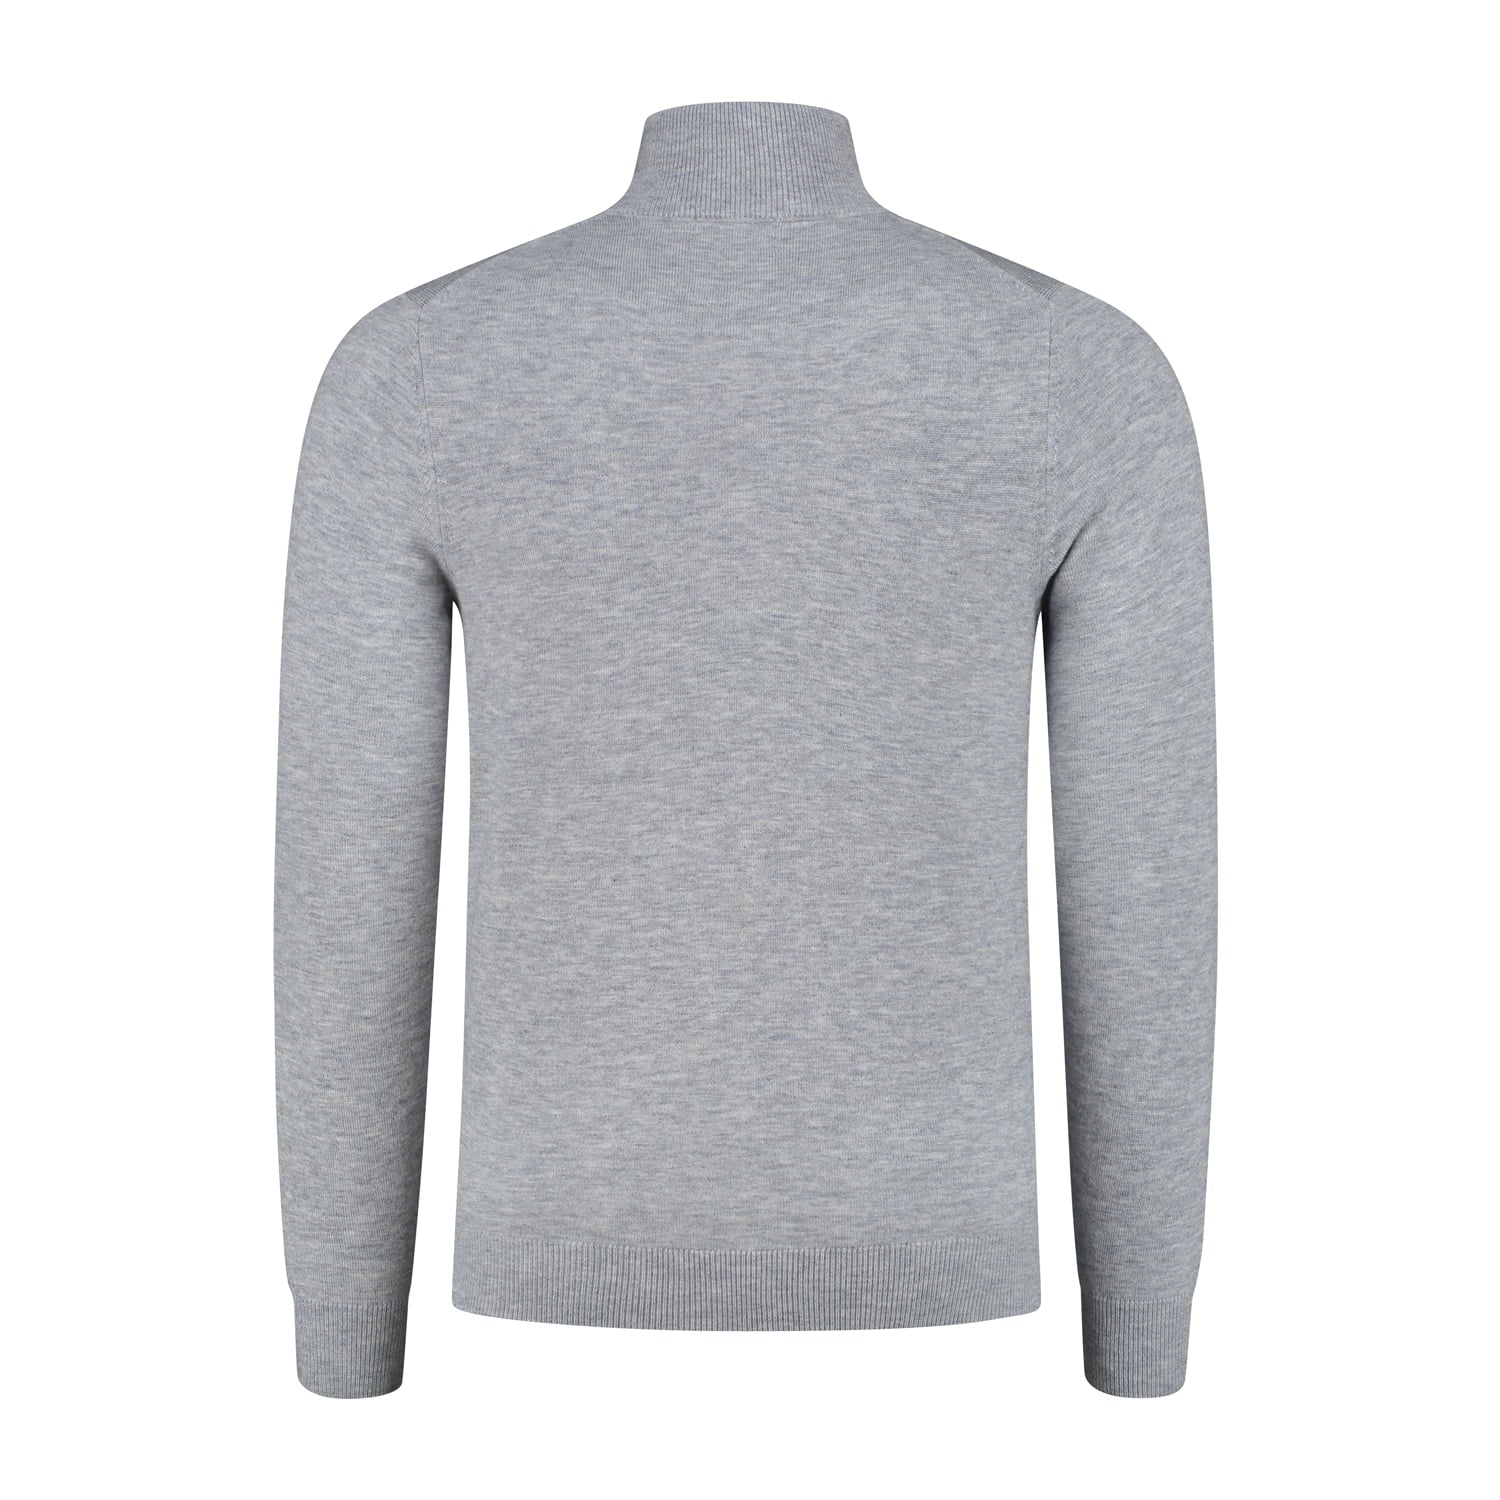 shop grey sweater